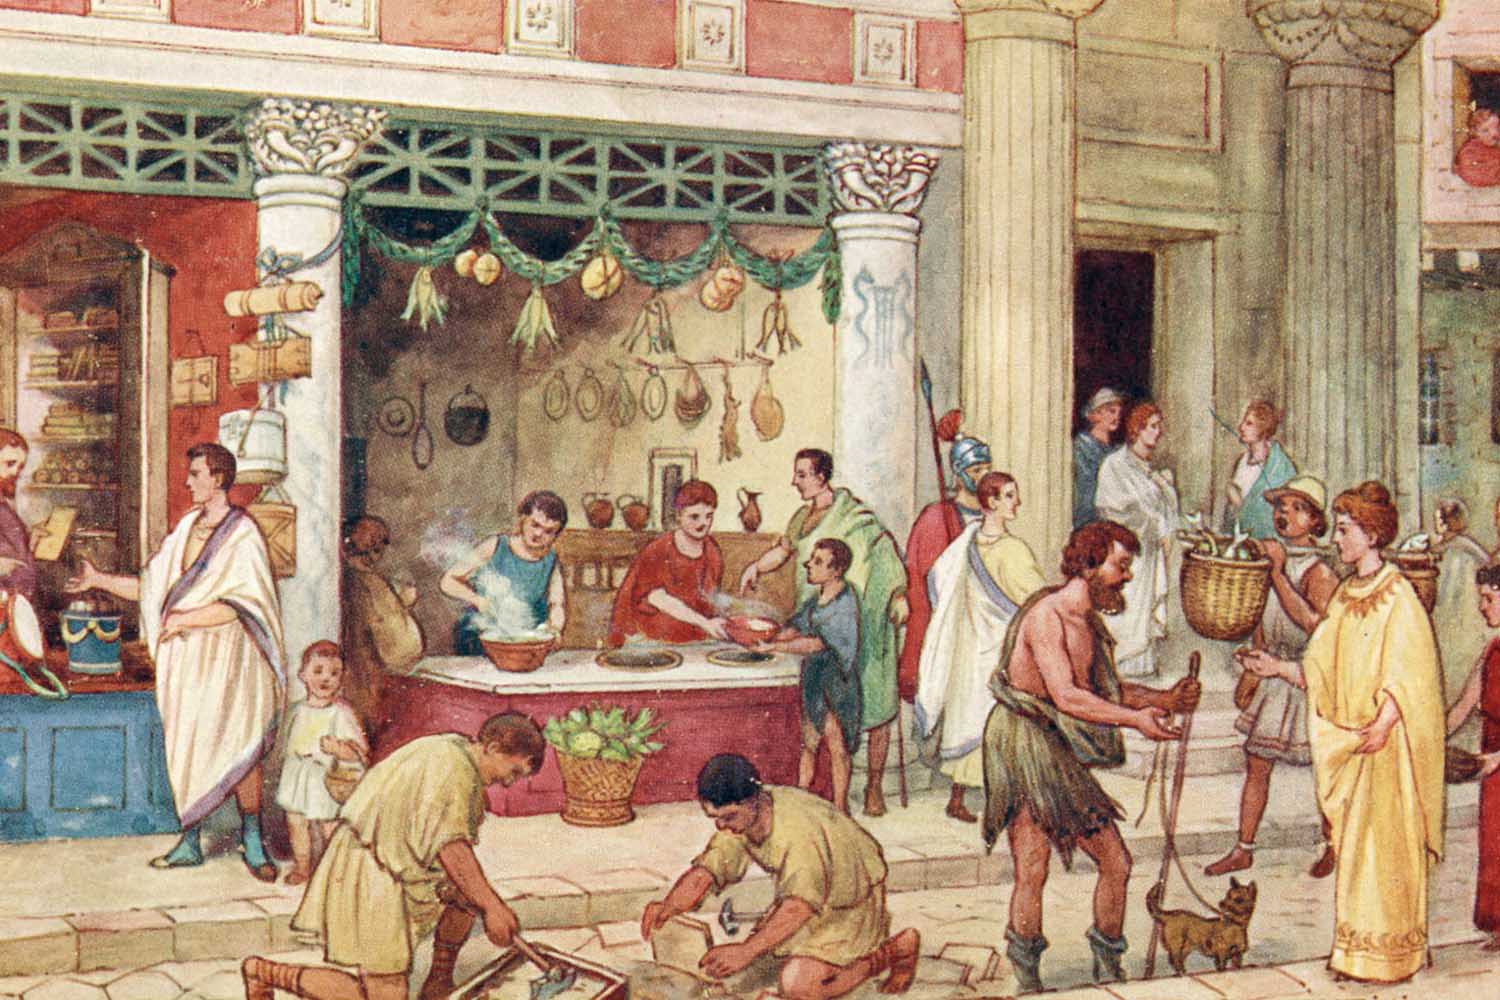 The Roman Empire - street scene with vendors. Produce, food, crafts, market, book seller, merchant, merchants, guard, guards, toga, togas.